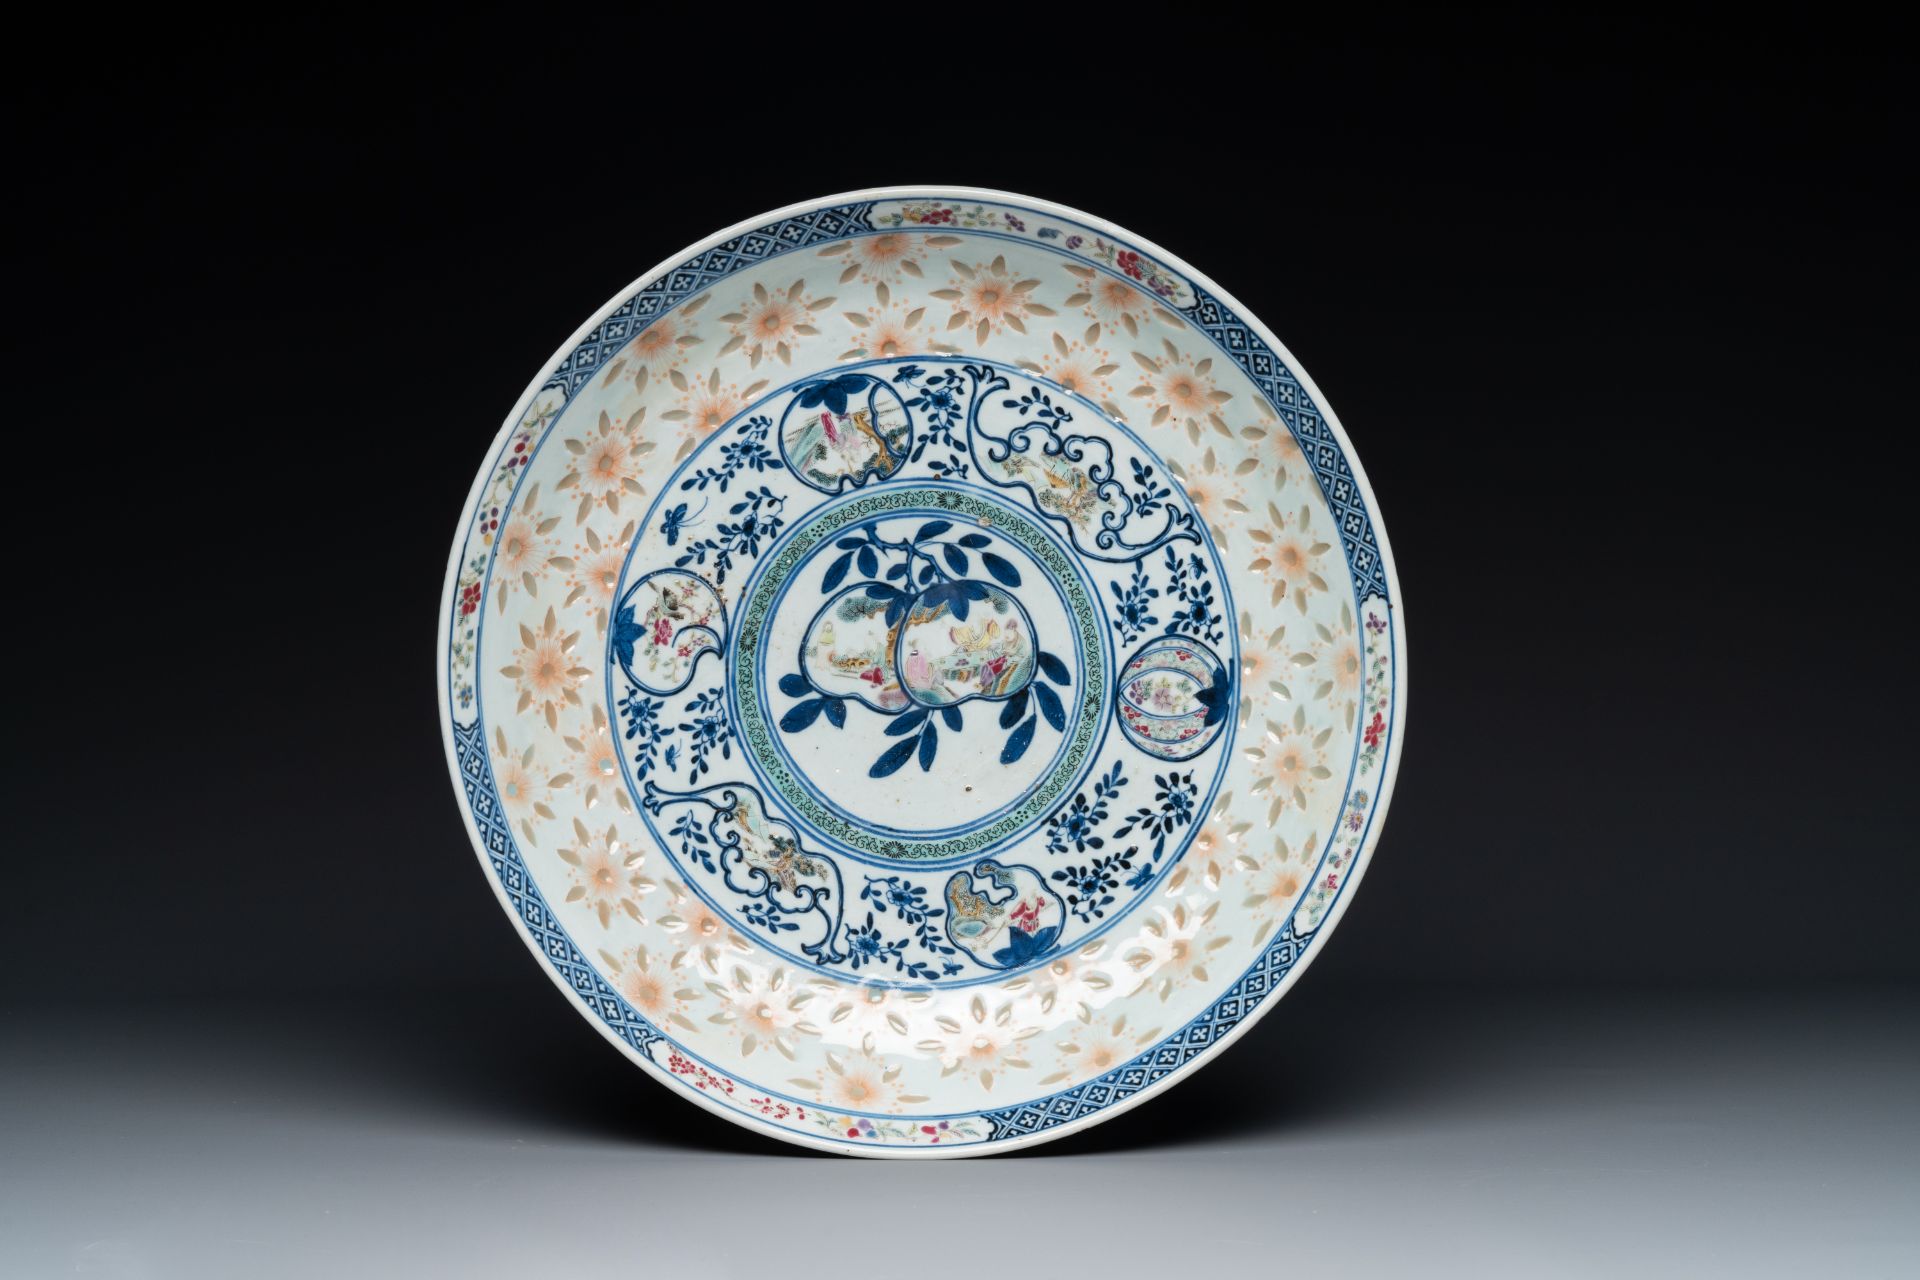 Two Chinese famille rose dishes, Kangxi and Shen De Tang æ…Žå¾·å ‚ mark, 19th C. - Image 4 of 5